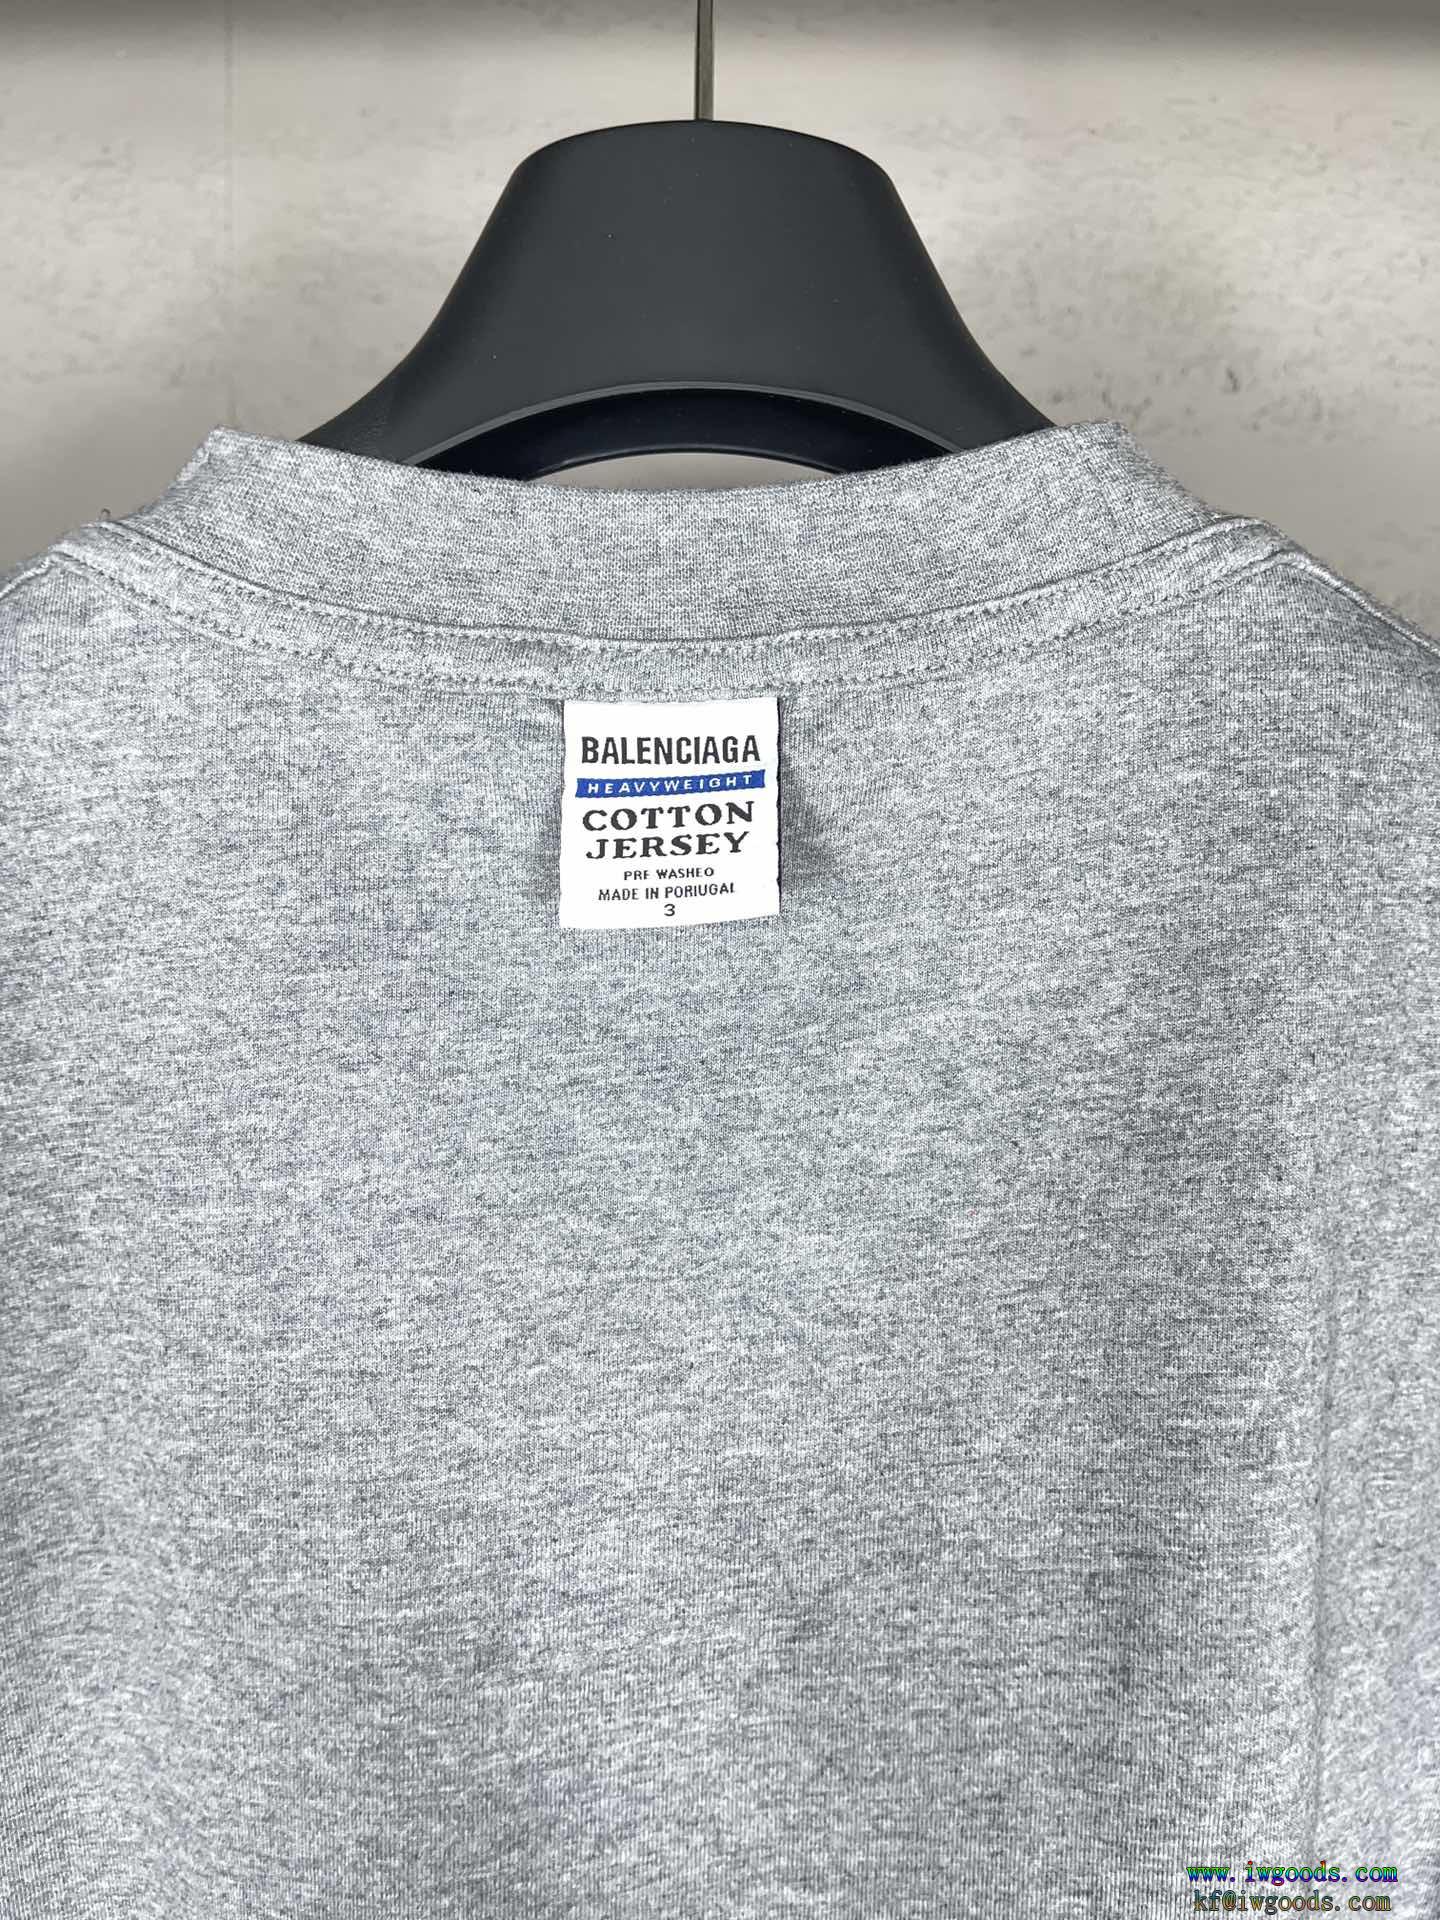 BALENCIAGA x ebay半袖Tシャツ【ユニセックス】ブランド 偽物 激安,BALENCIAGA x ebayブランド コピー